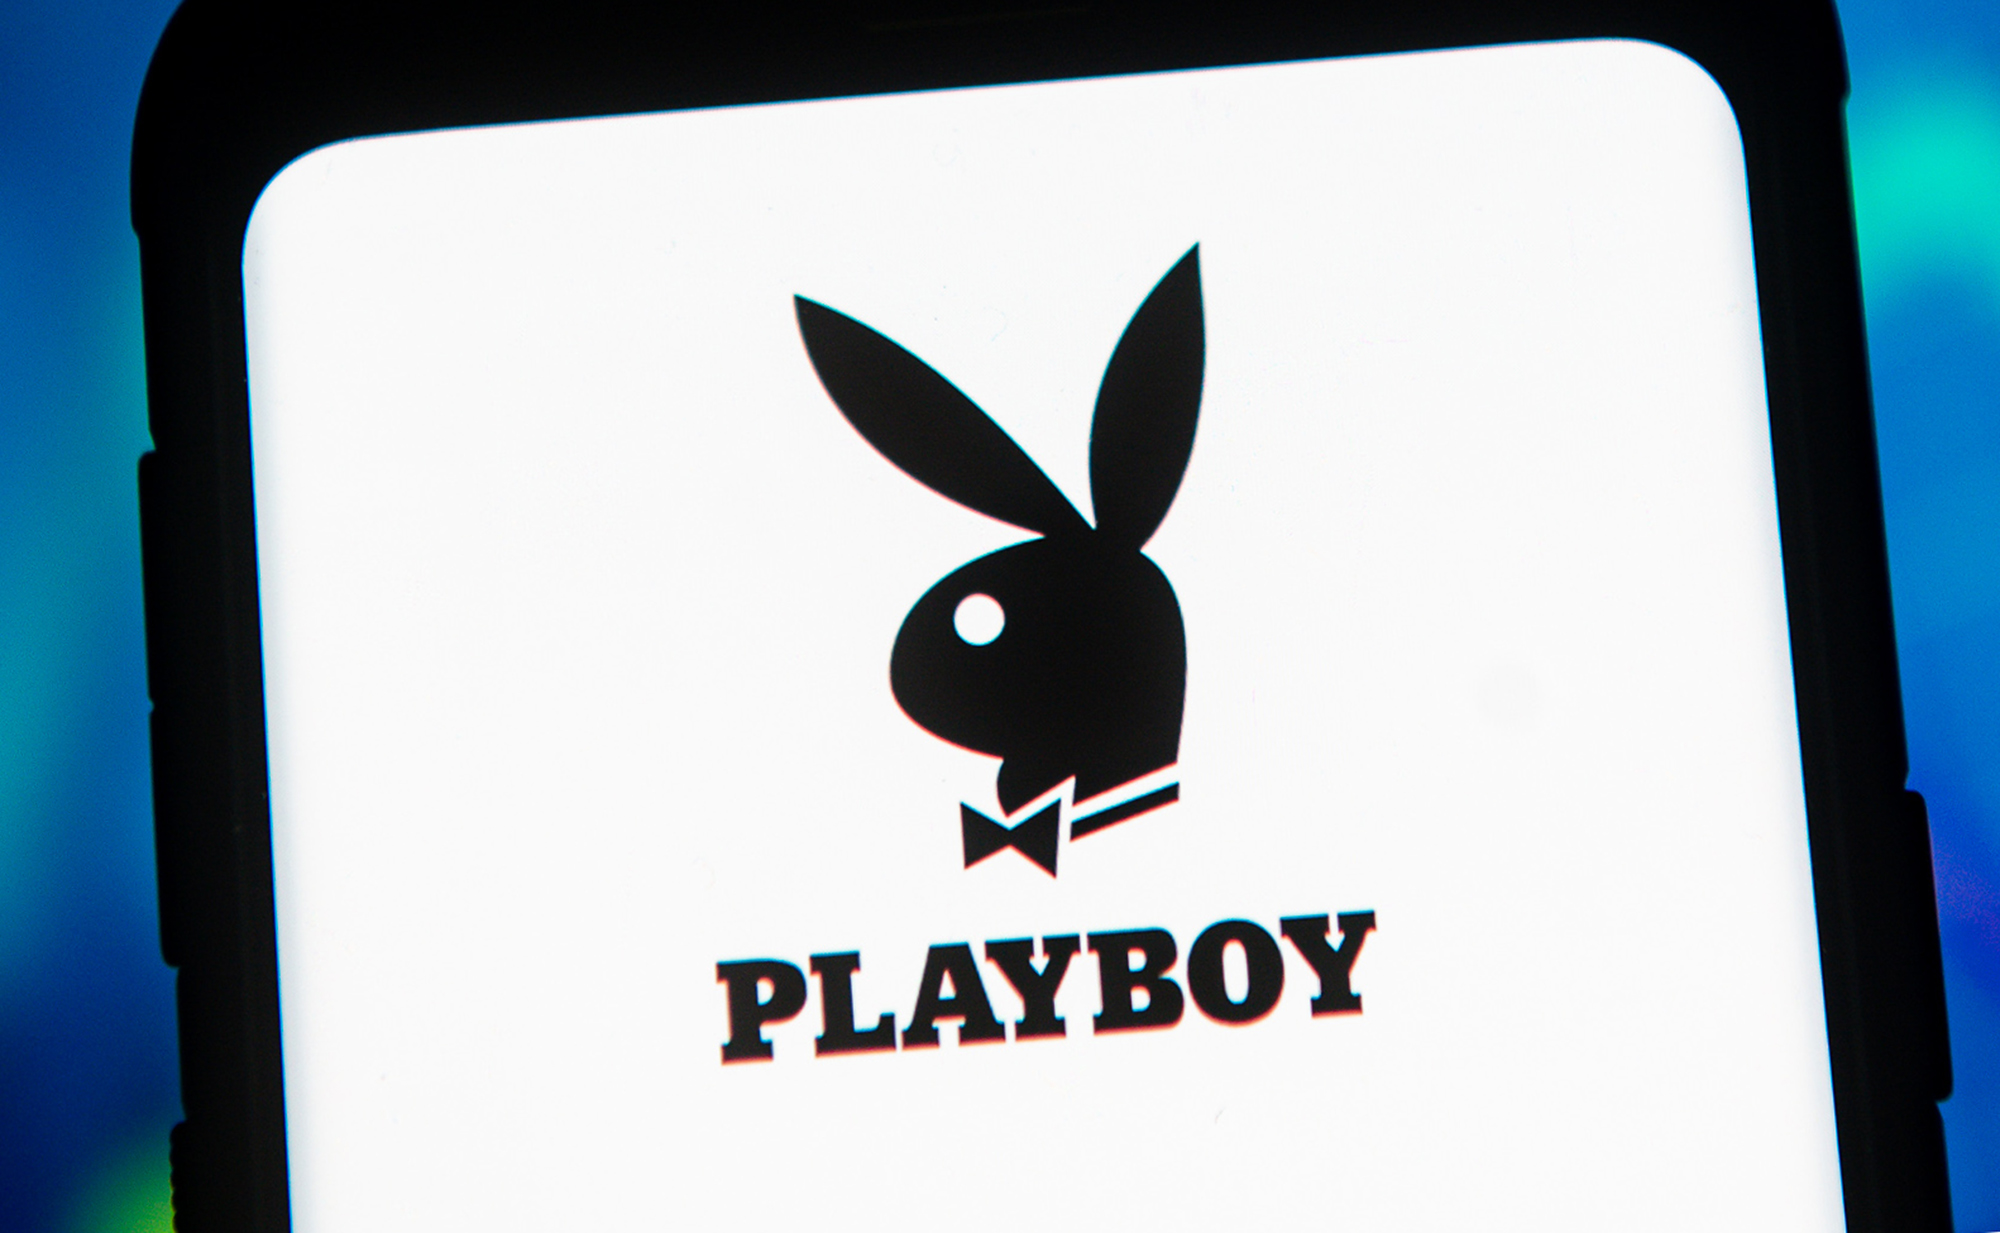 Watch Playboy Tv Free Online